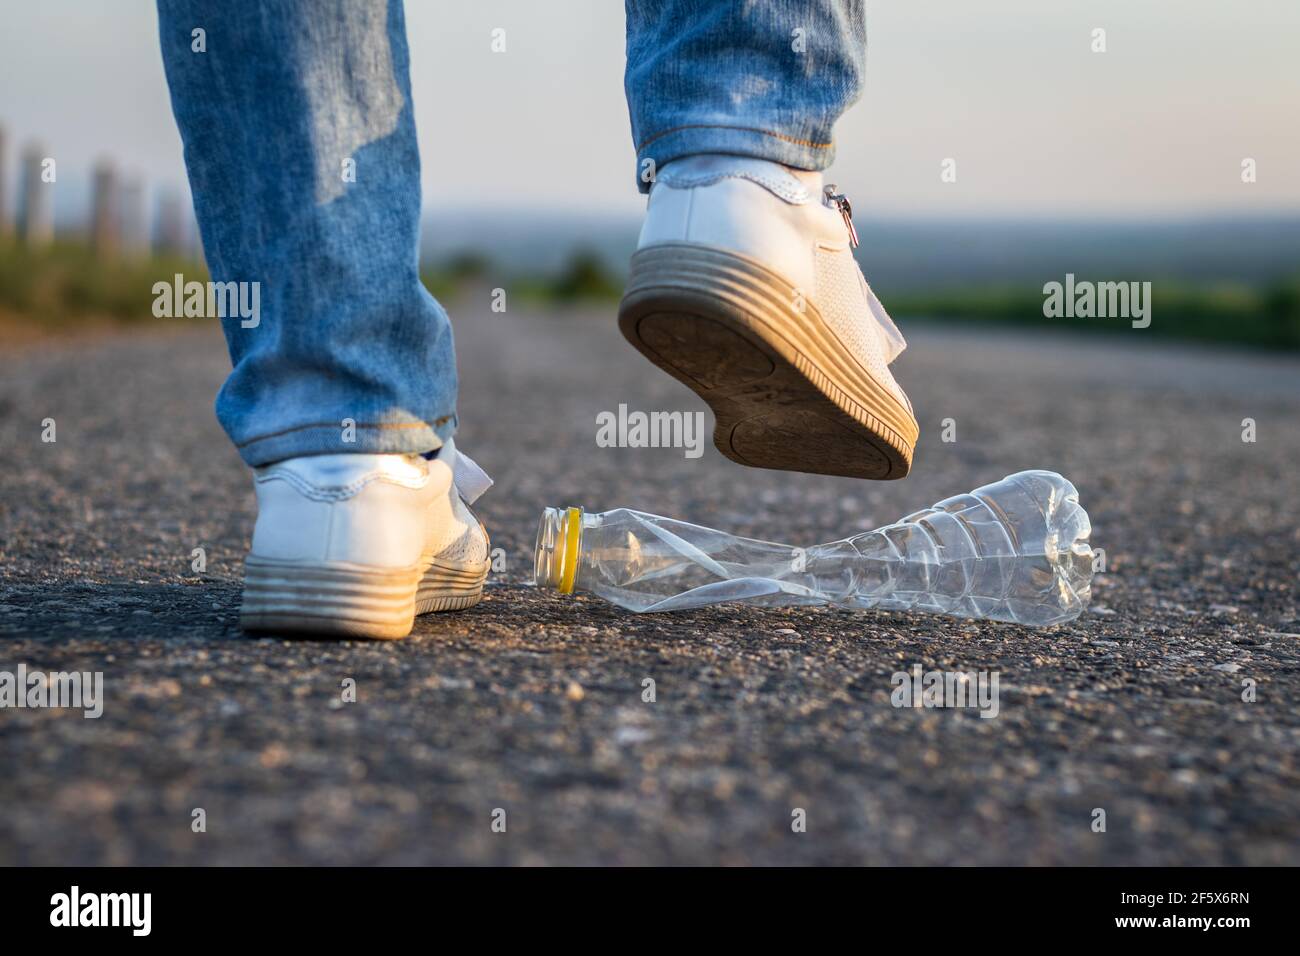 Legs crush plastic bottle on the road. Environmental conservation. Plastic waste Stock Photo